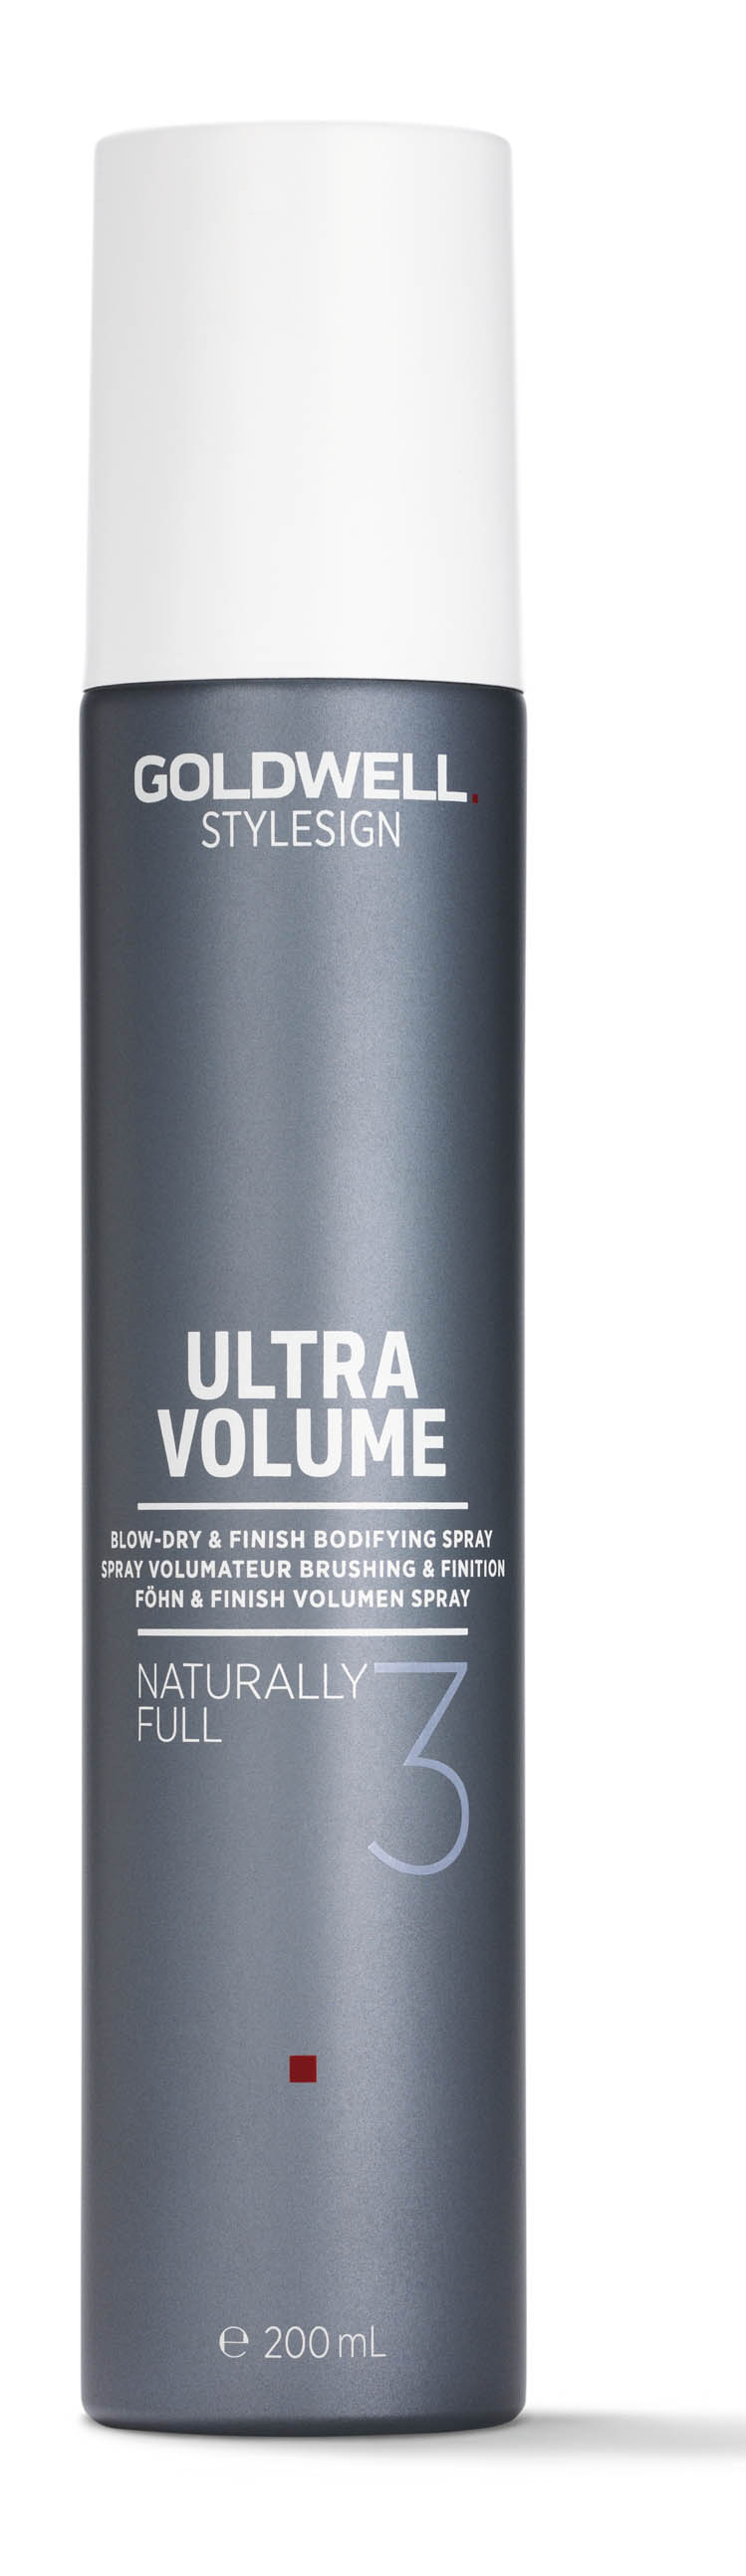 Stylesign NATURALLY FULL, Föhn & Finish Volumen Spray, 200 ml